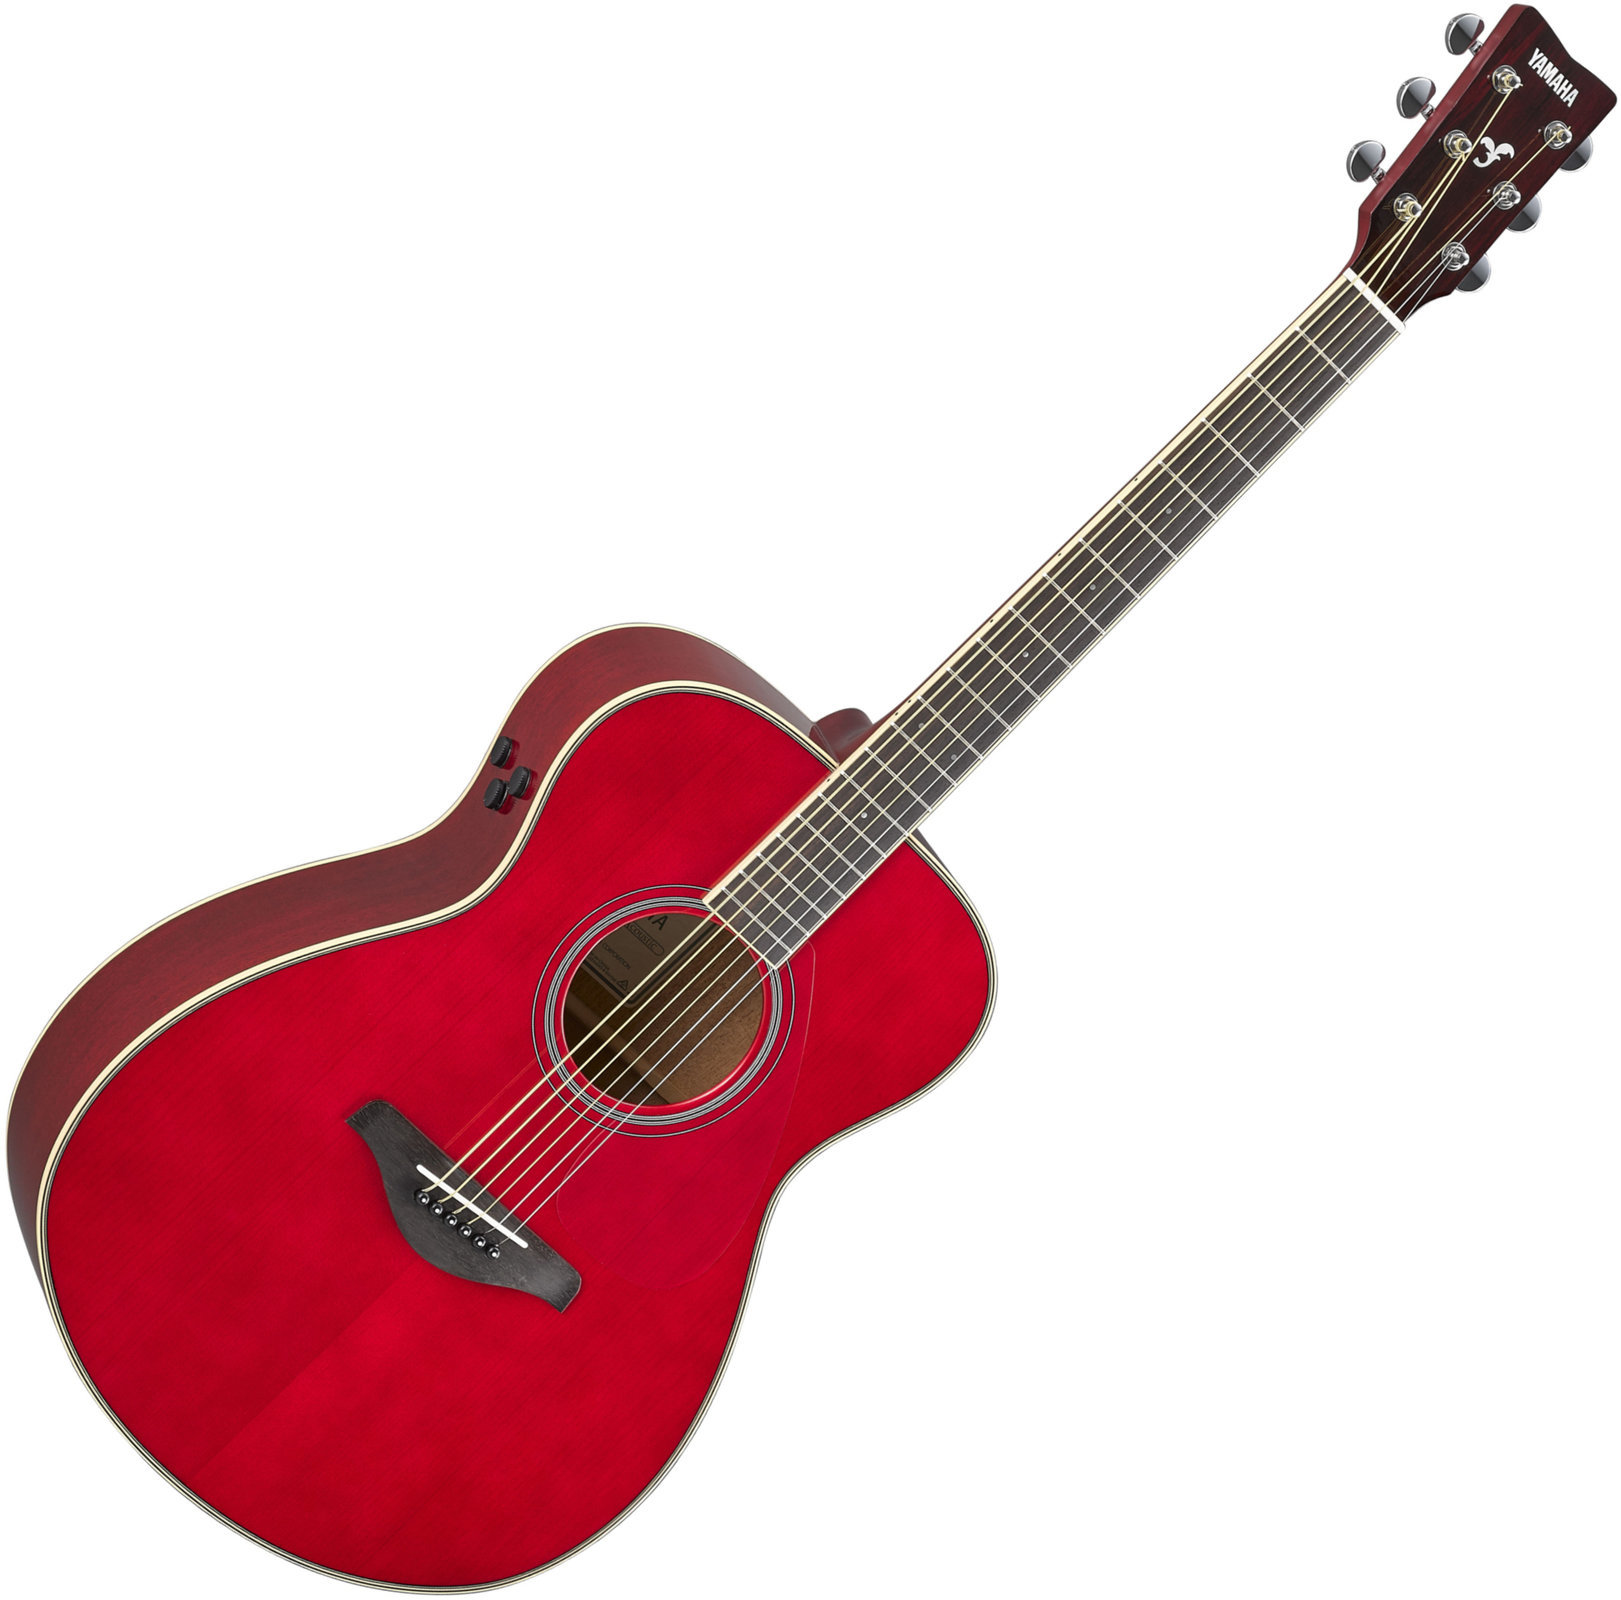 Jumbo elektro-akoestische gitaar Yamaha FS-TA Ruby Red